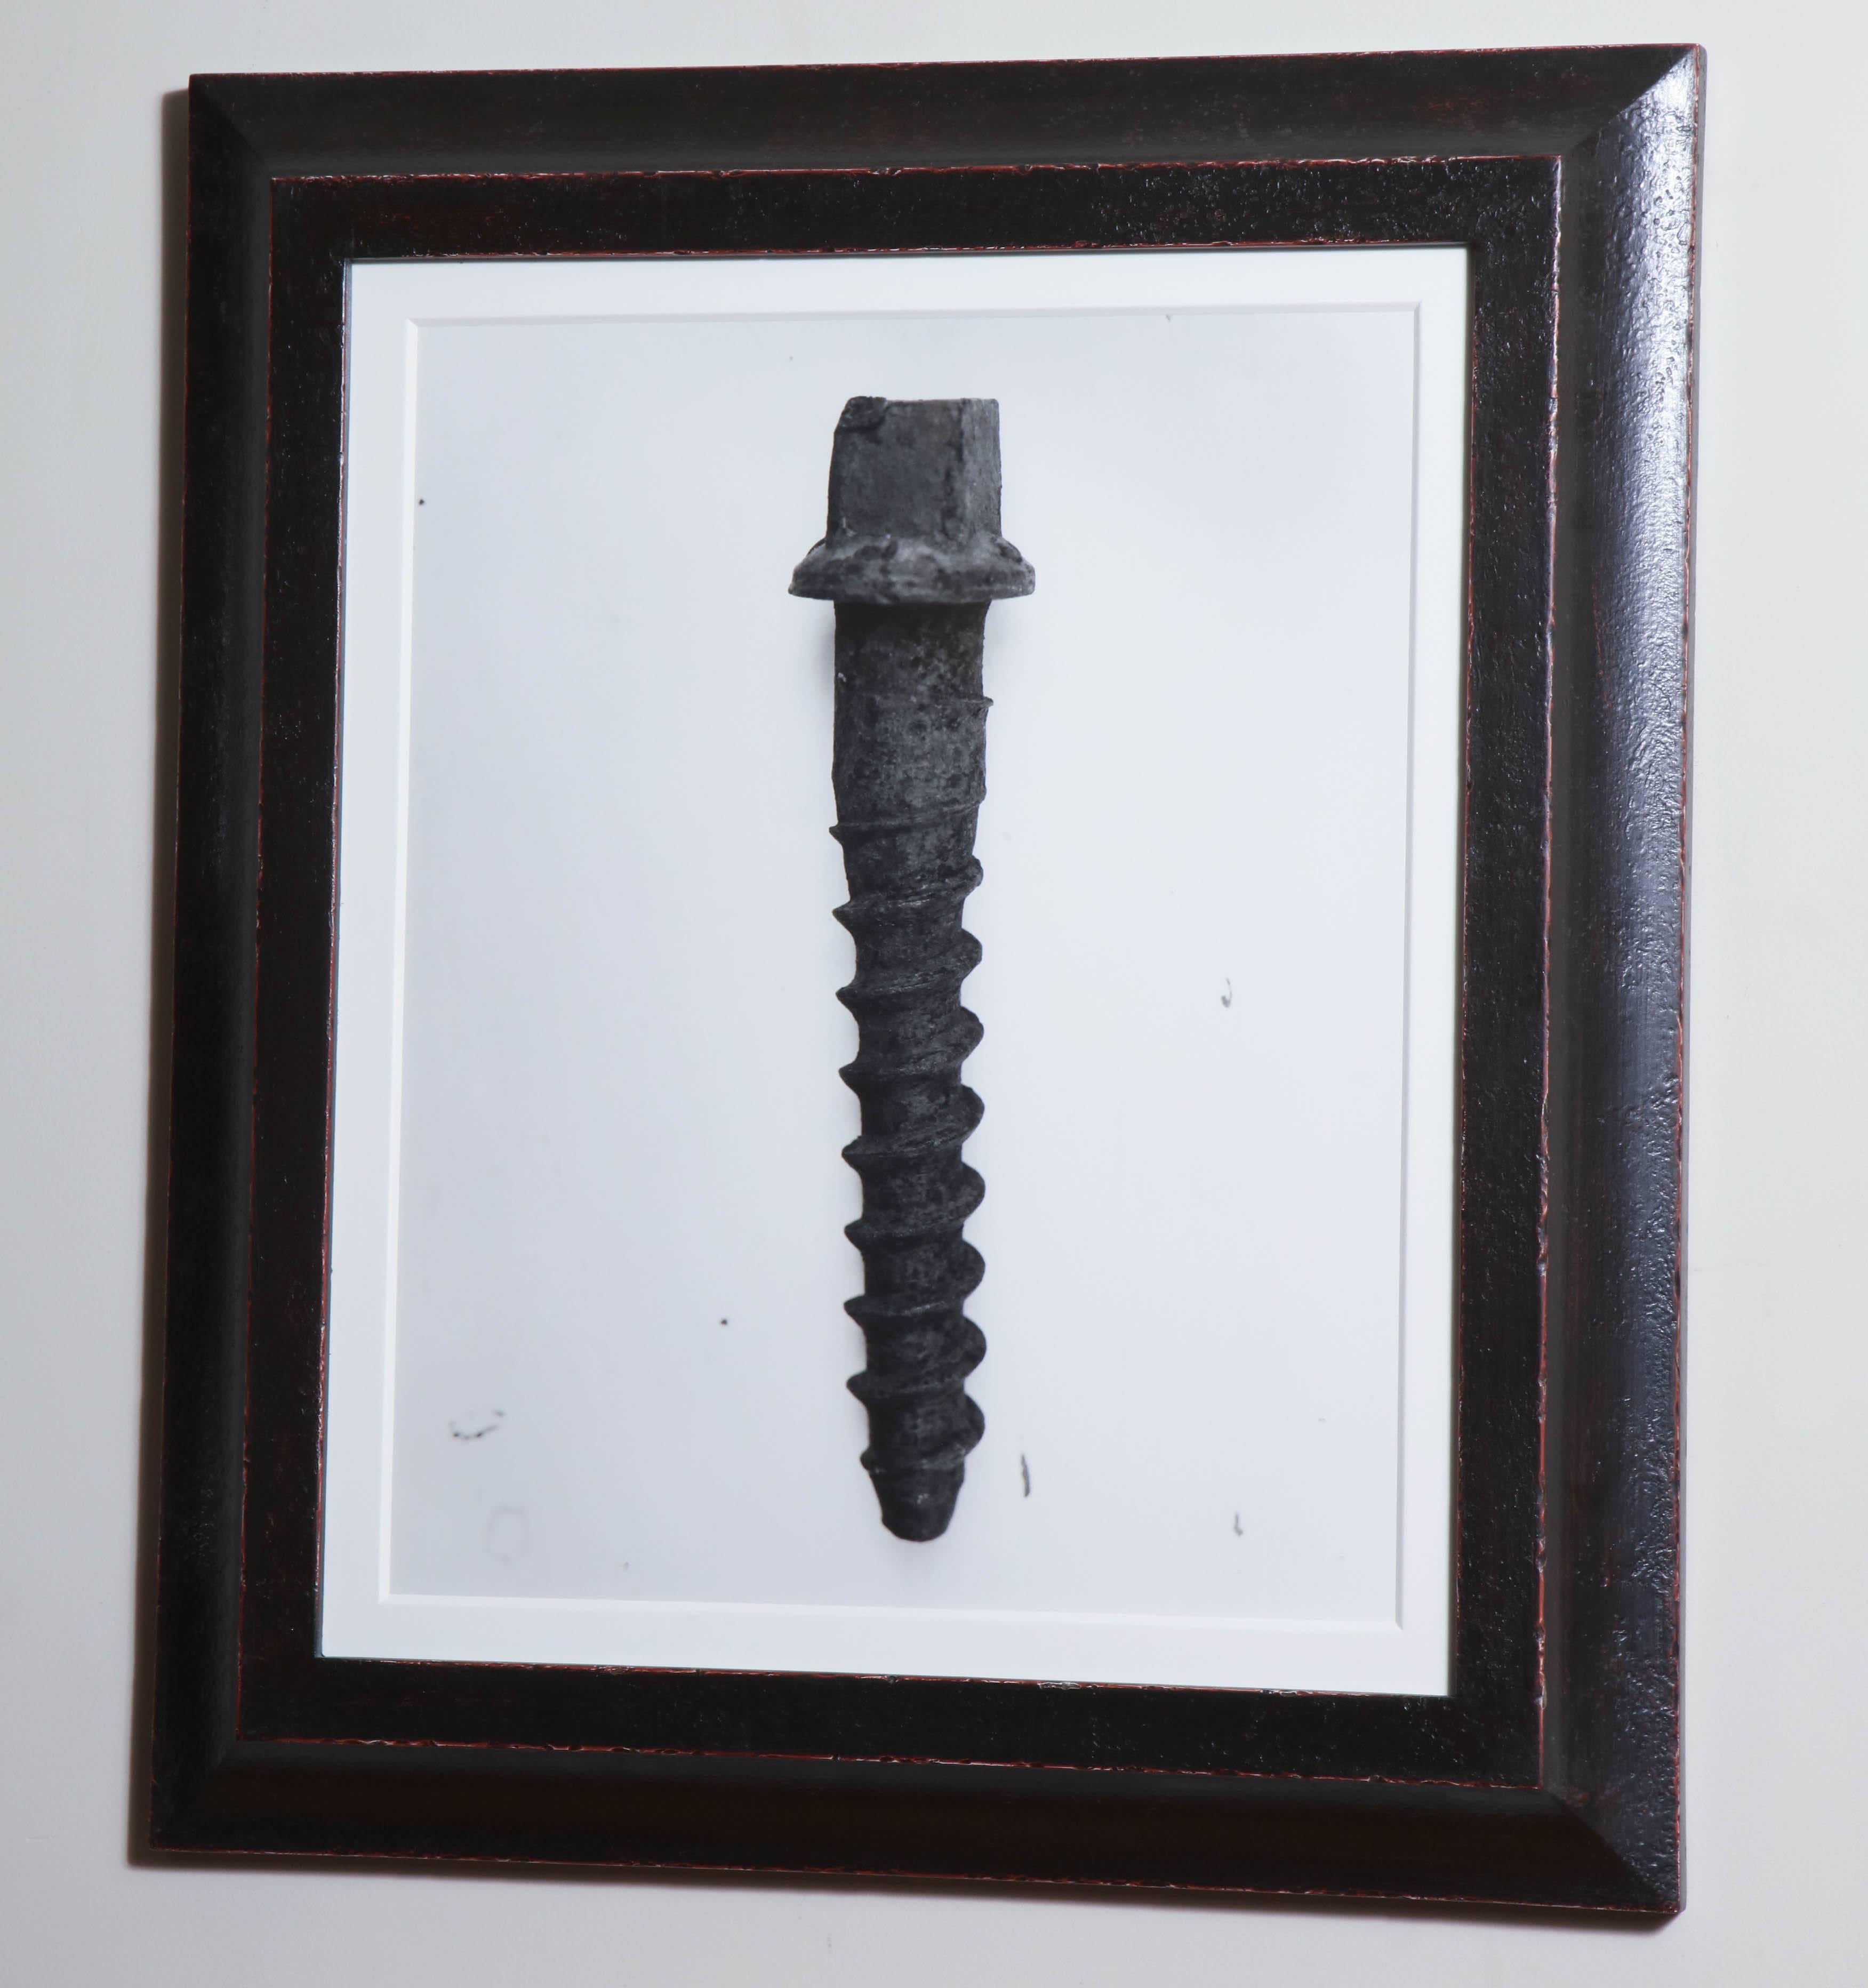 Railroad screw, 2010
Silver gelatin print, ed. 5/25
Framed in a heavily distressed Japan black and ebonized pyramid frame.
  